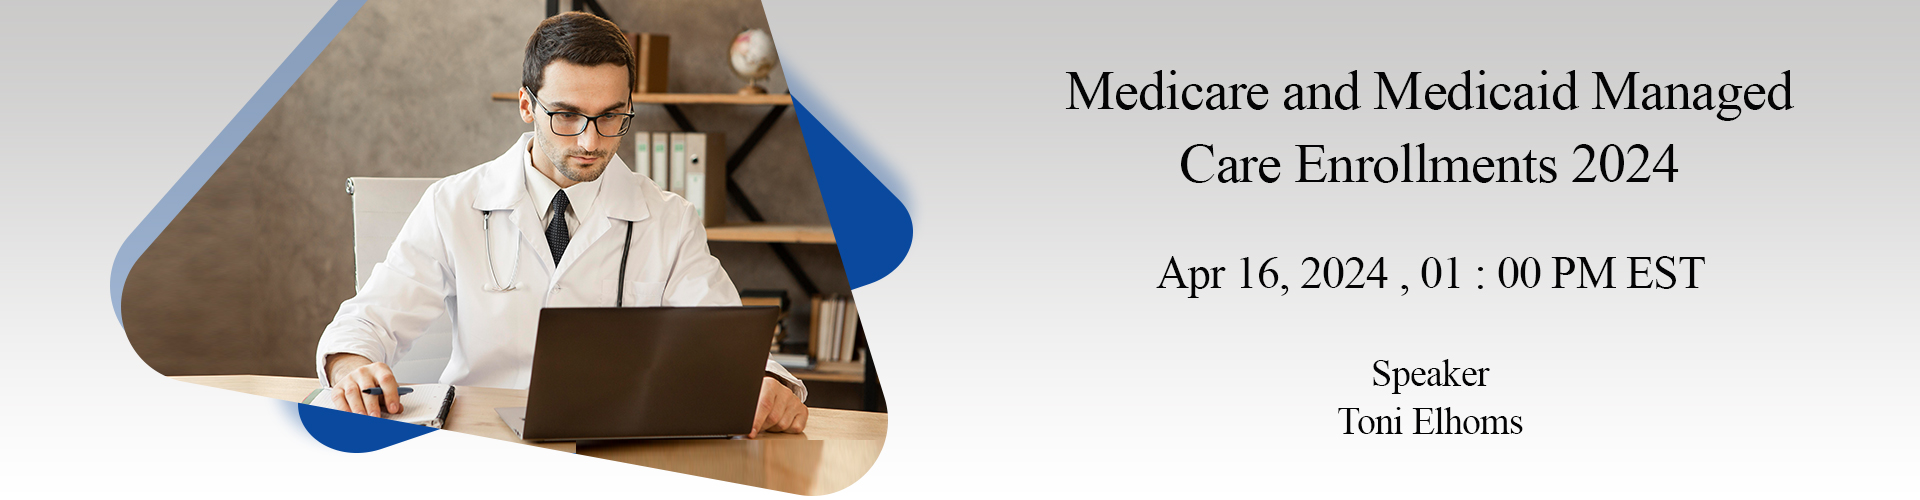 https://conferencepanel.com/conference/medicare-and-medicaid-managed-care-enrollments